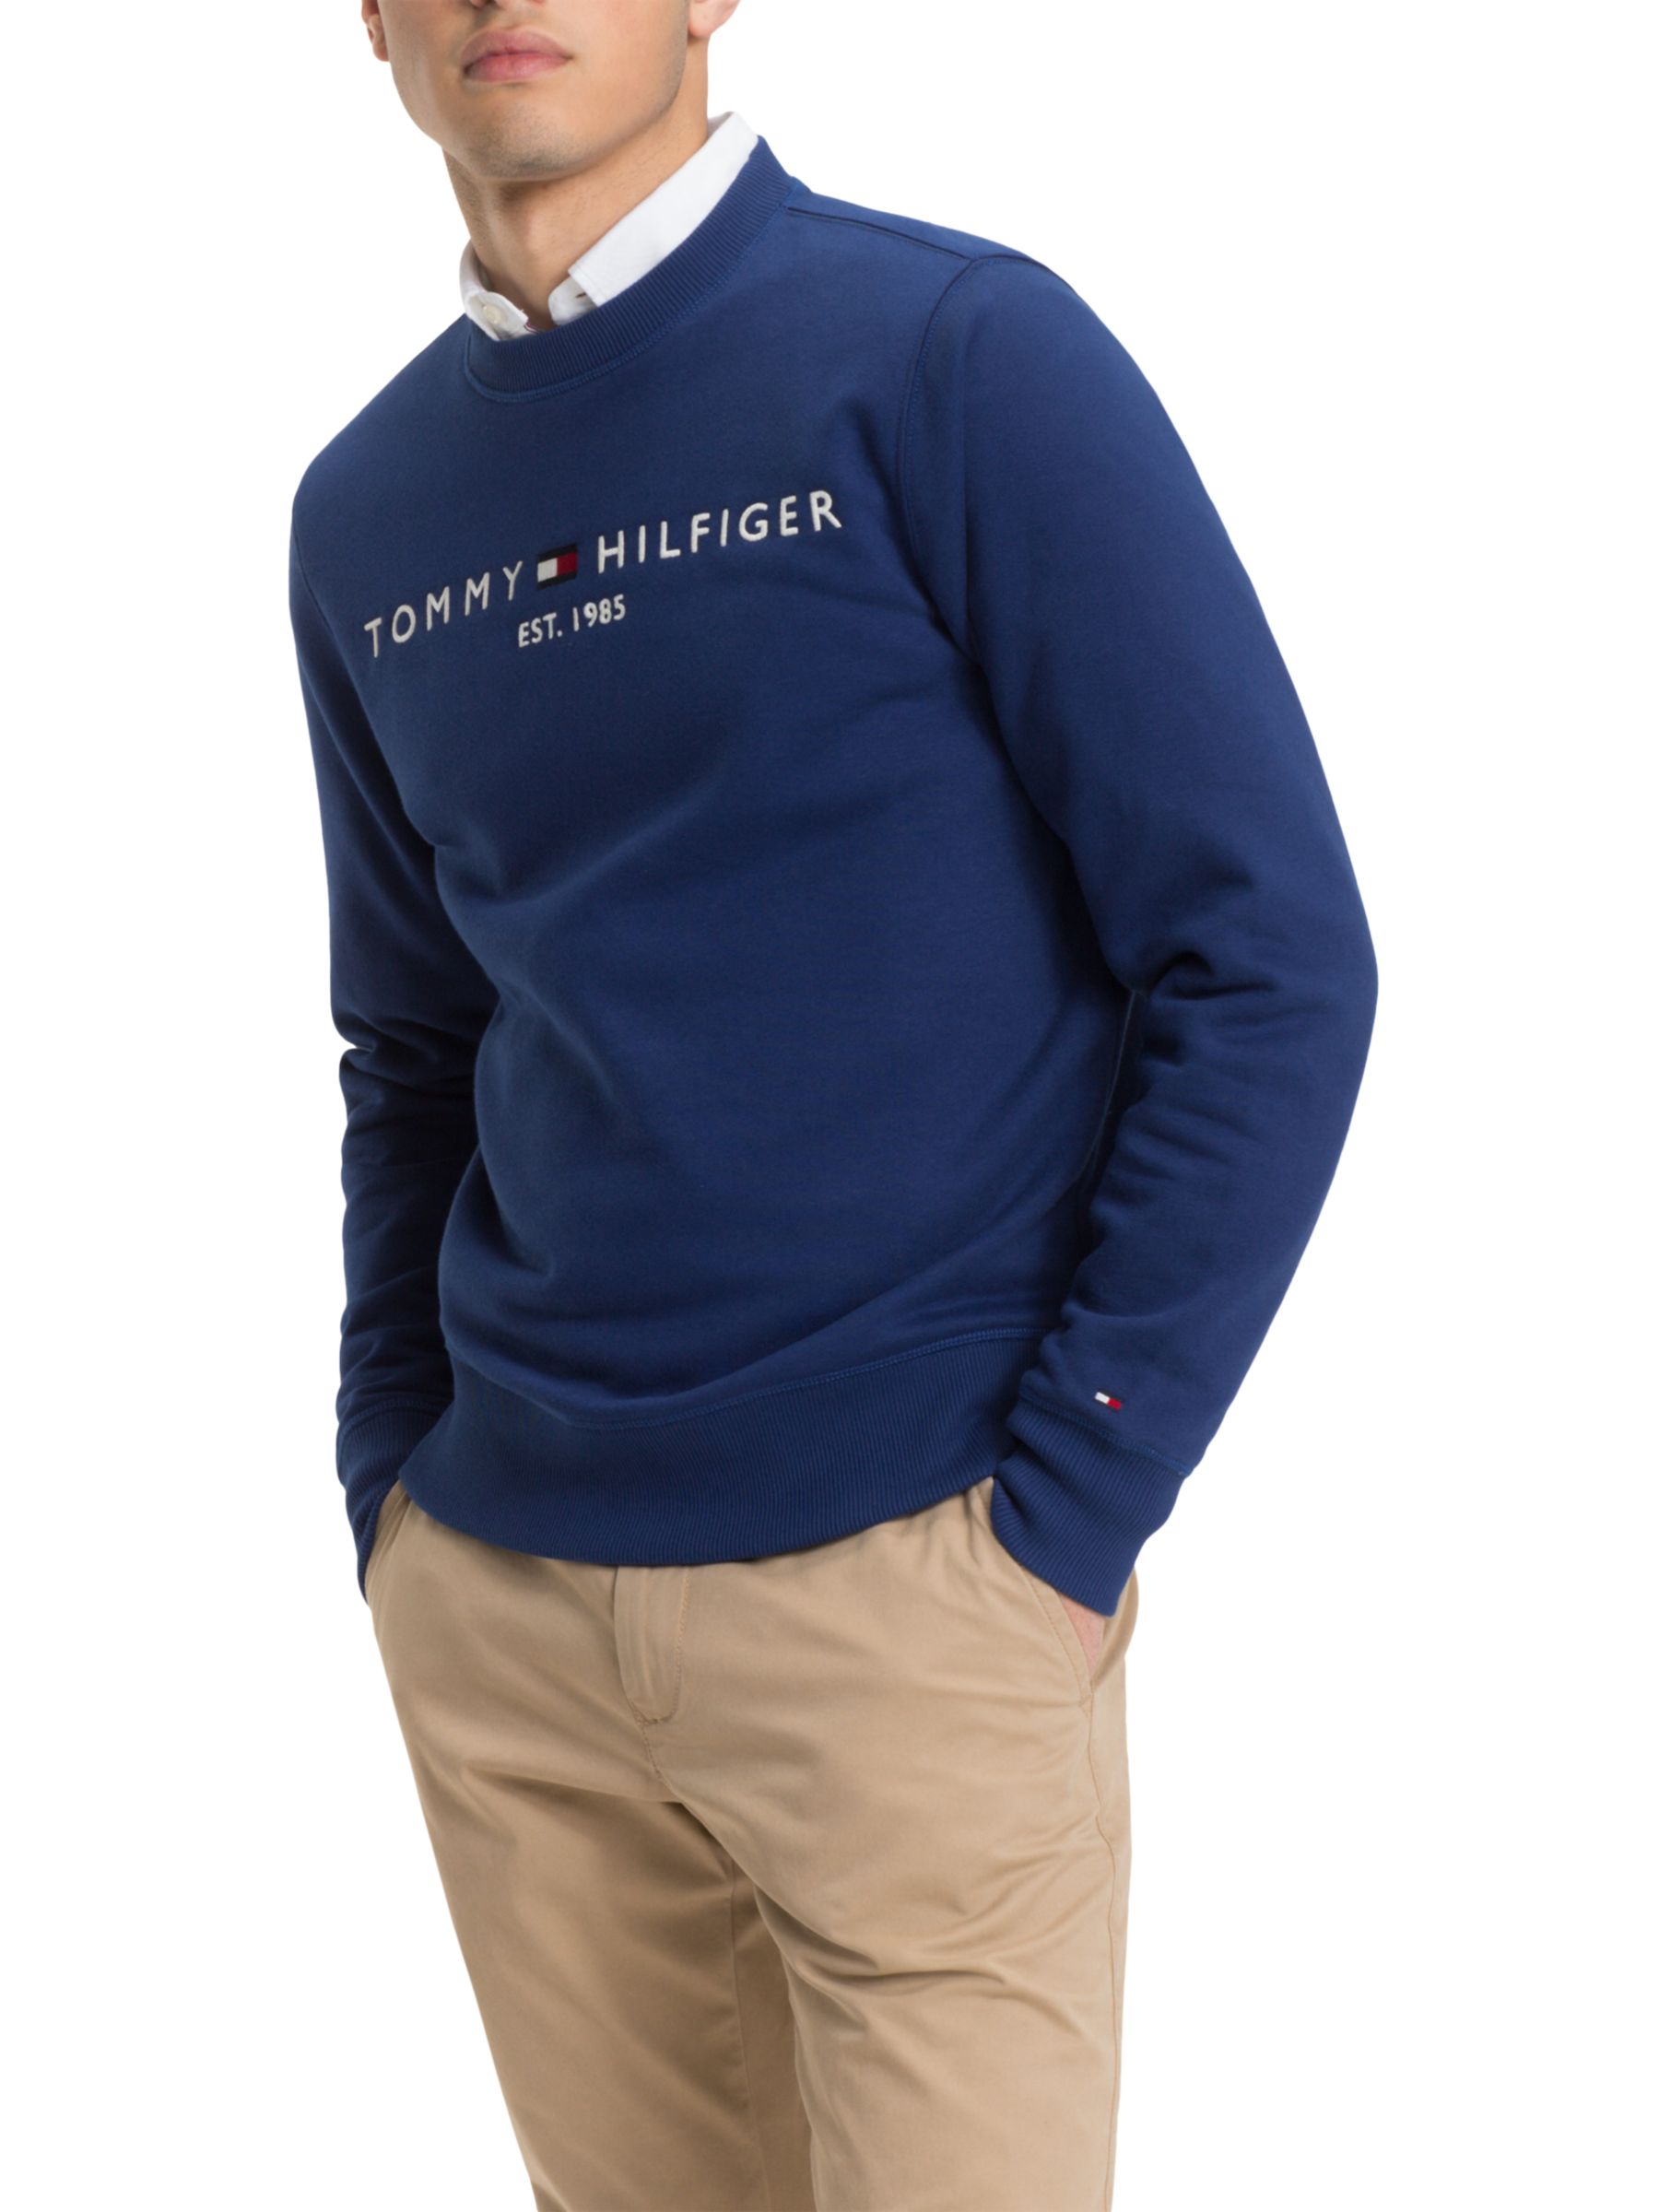 tommy hilfiger blue sweatshirt